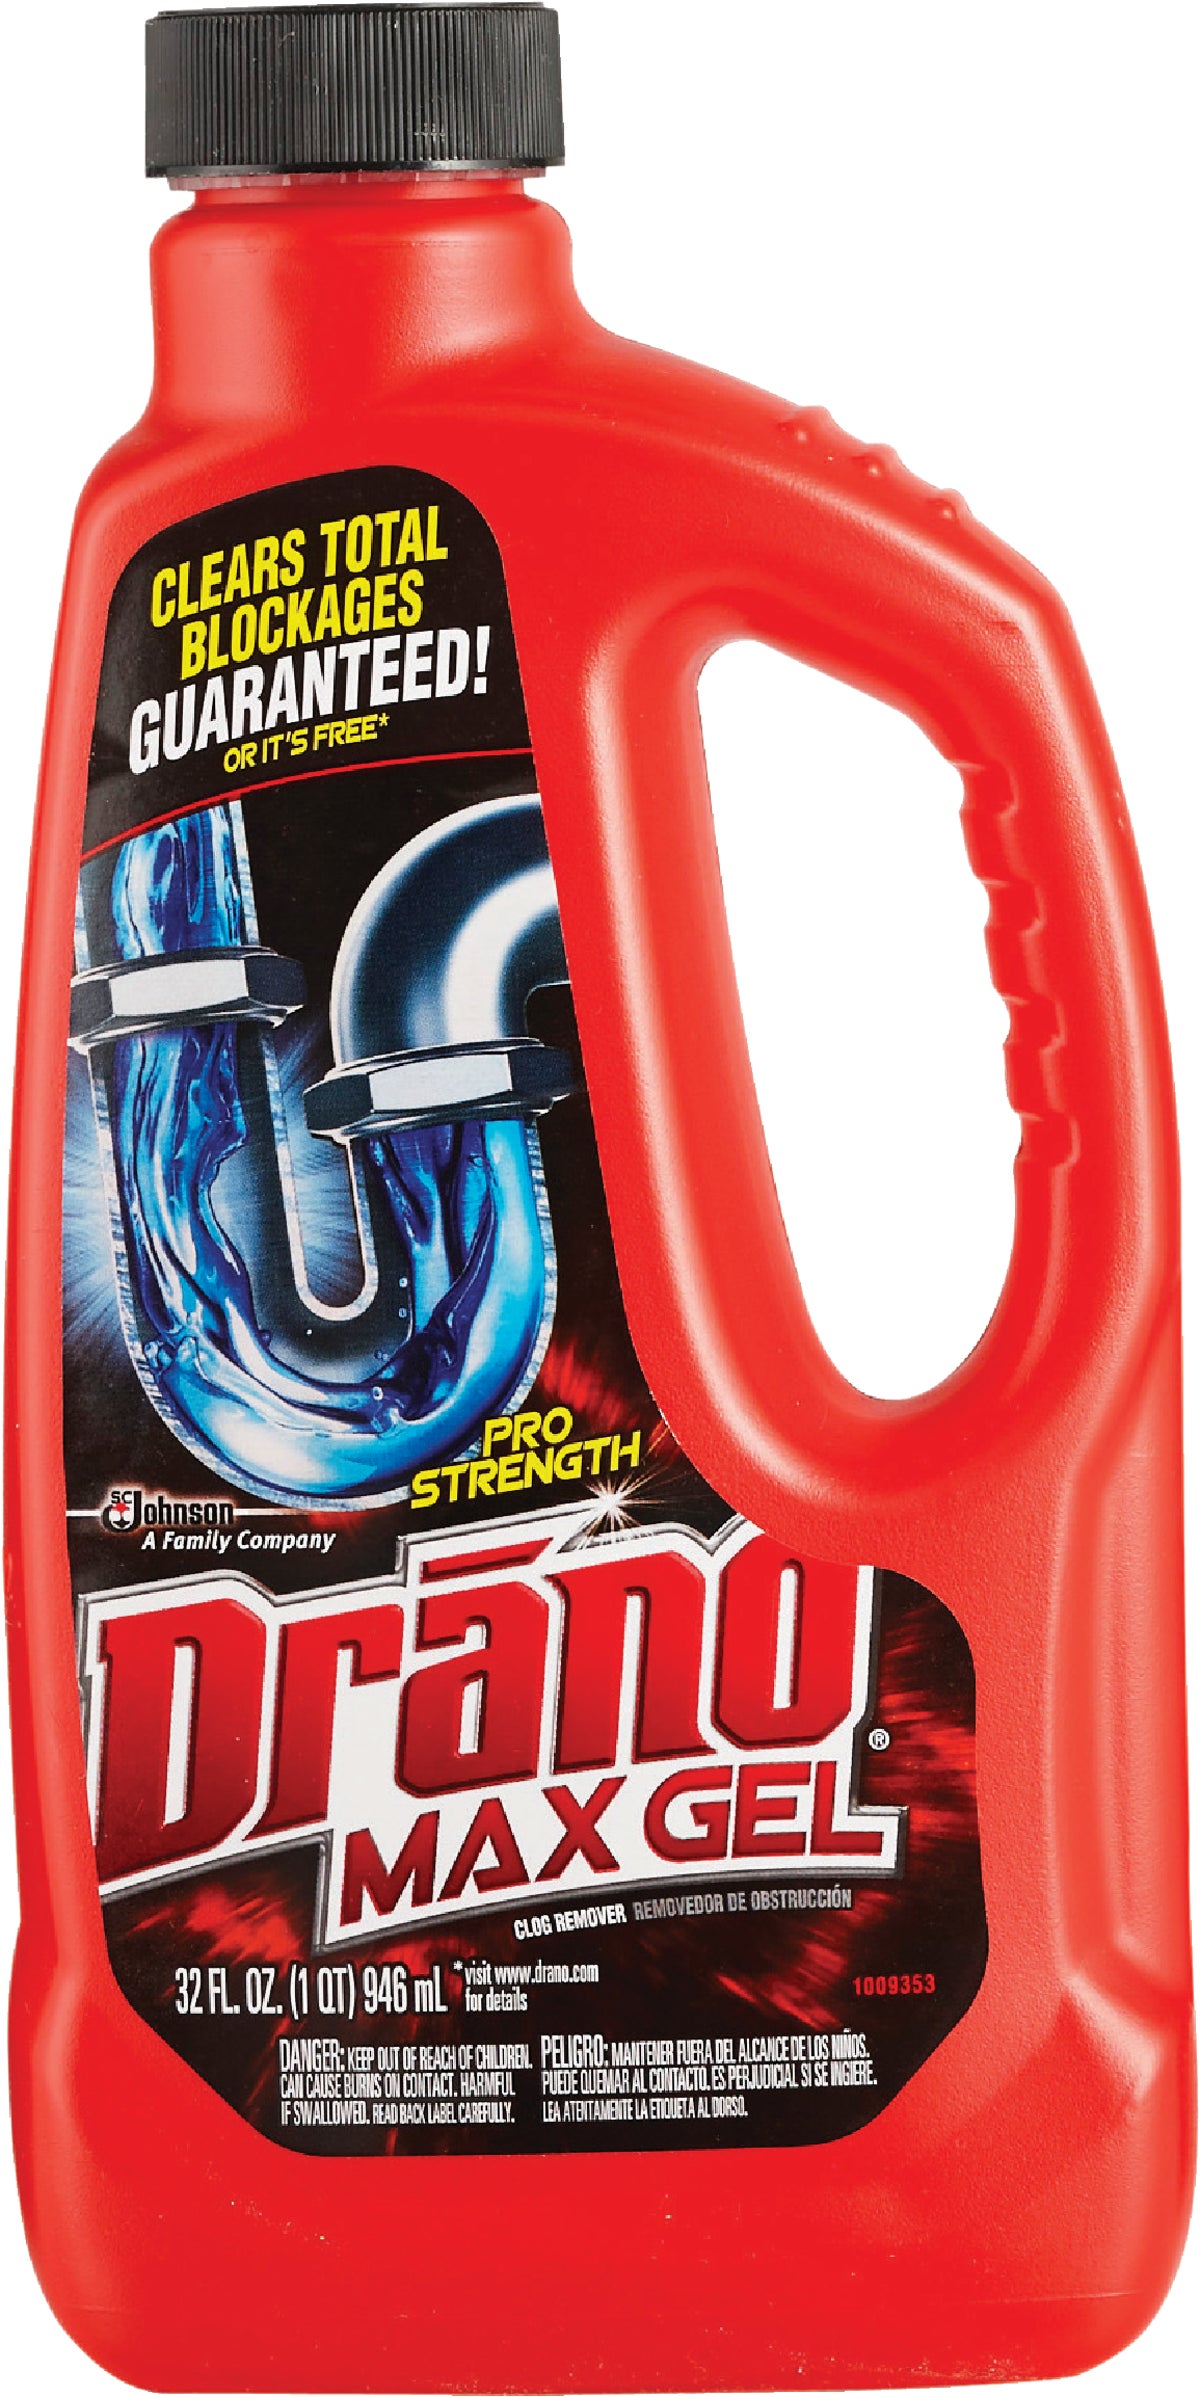 Drano Commercial Line Clog Remover, Max Gel, Pro Strength - 1 gal, 128 fl oz